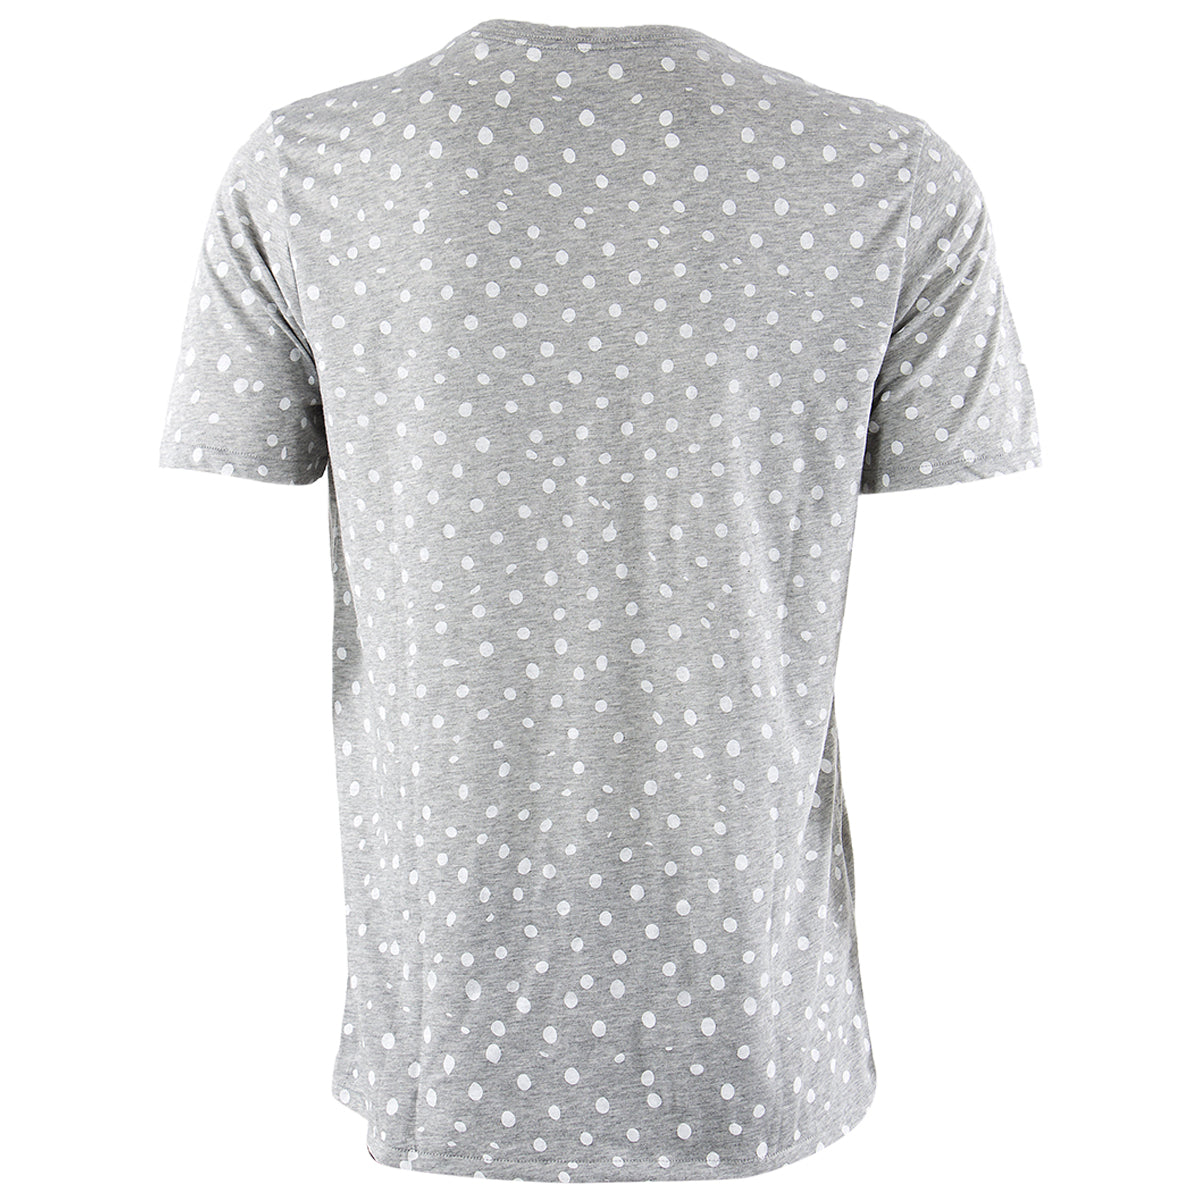 Nike Qt S+ Polka Dot T-shirt Mens Style : 695739